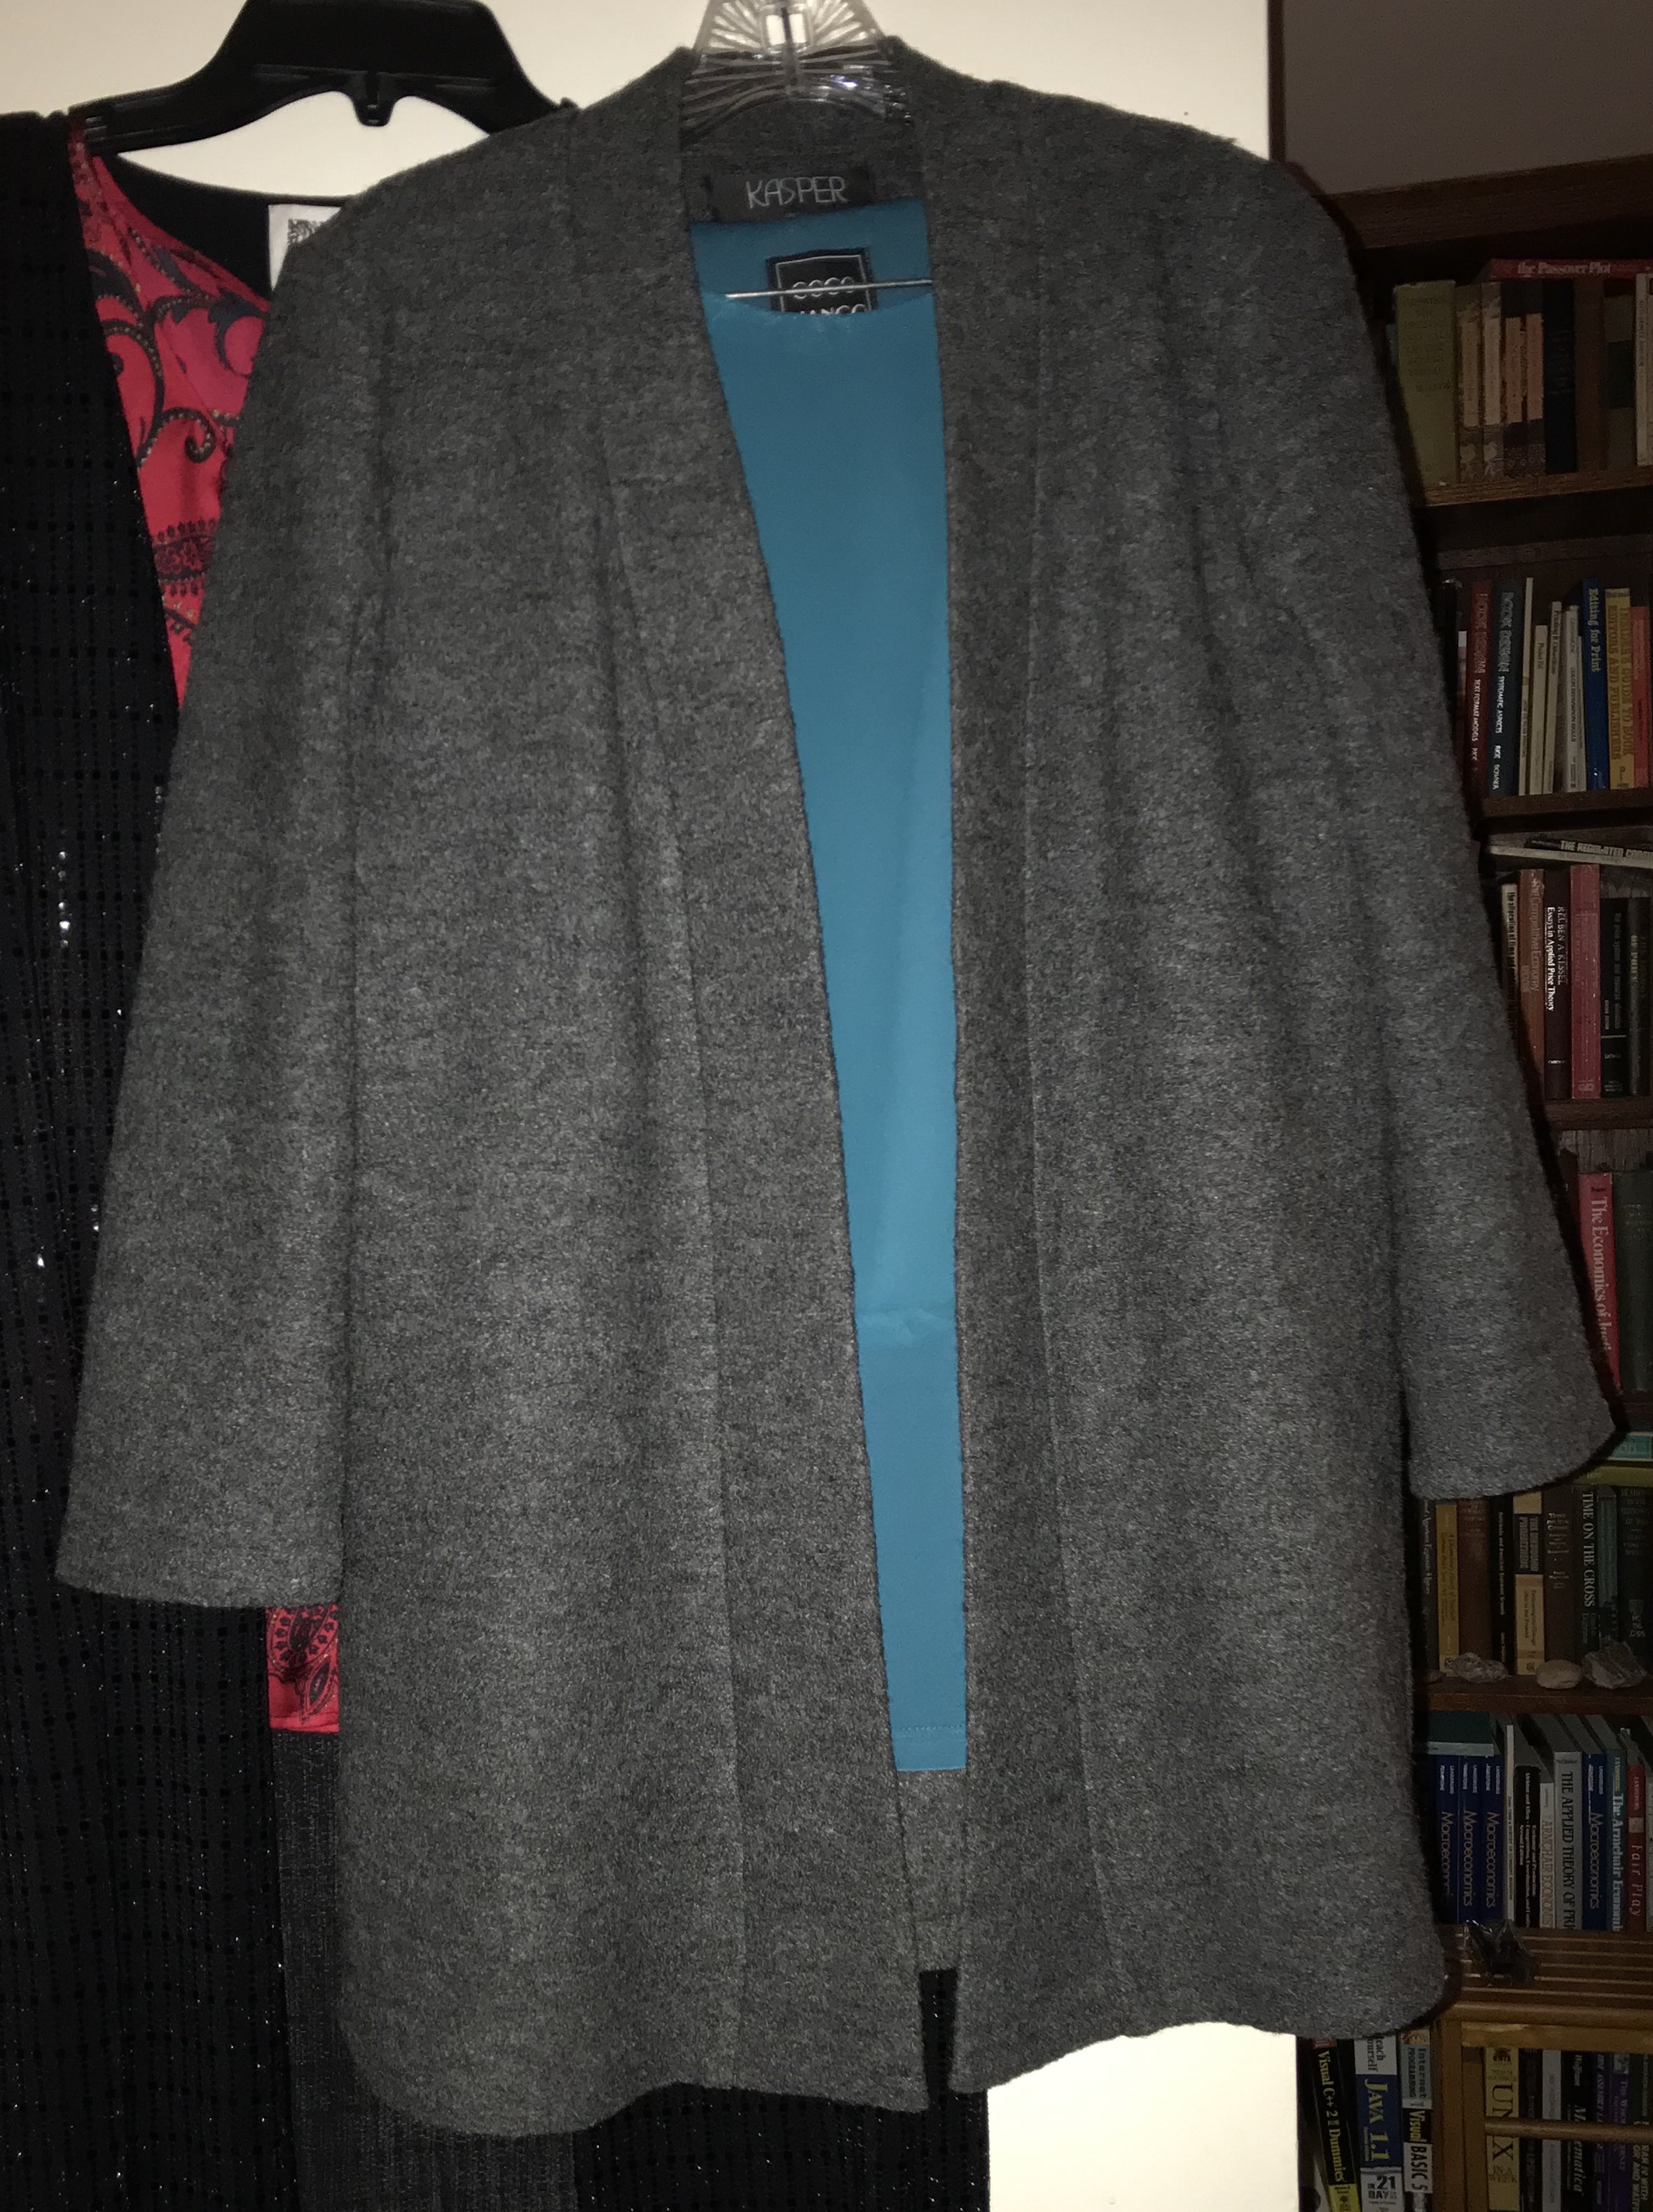 Wool shoddy jacket, Jan. 2020, New York City